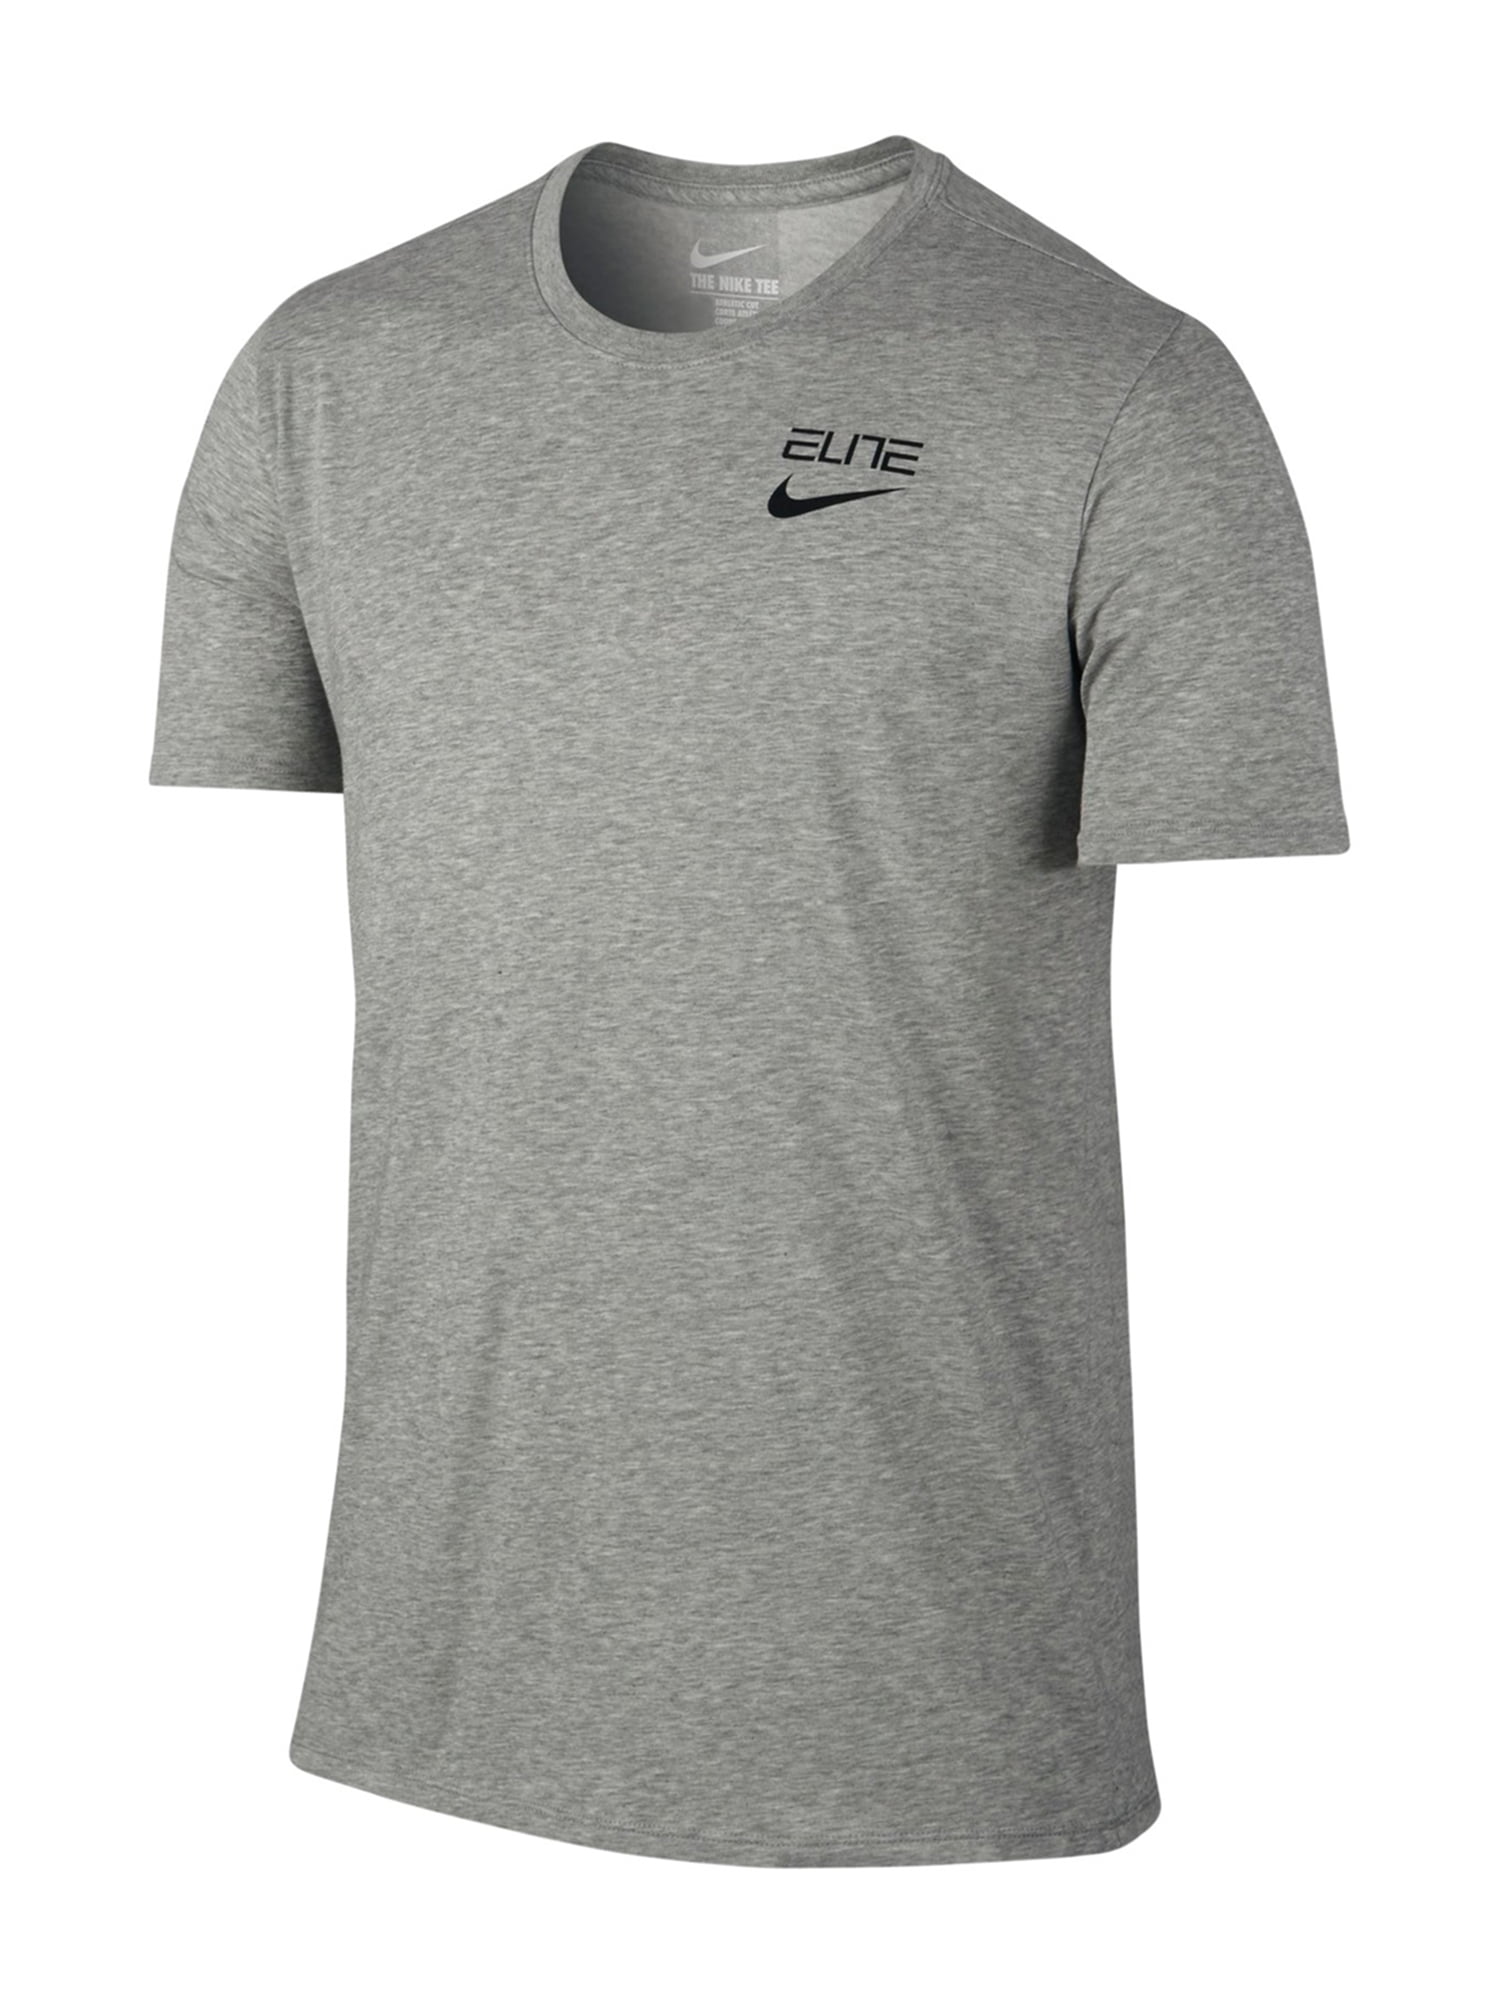 Nike - Nike Mens Dri-Fit Elite Stripe Basic T-Shirt - Walmart.com ...